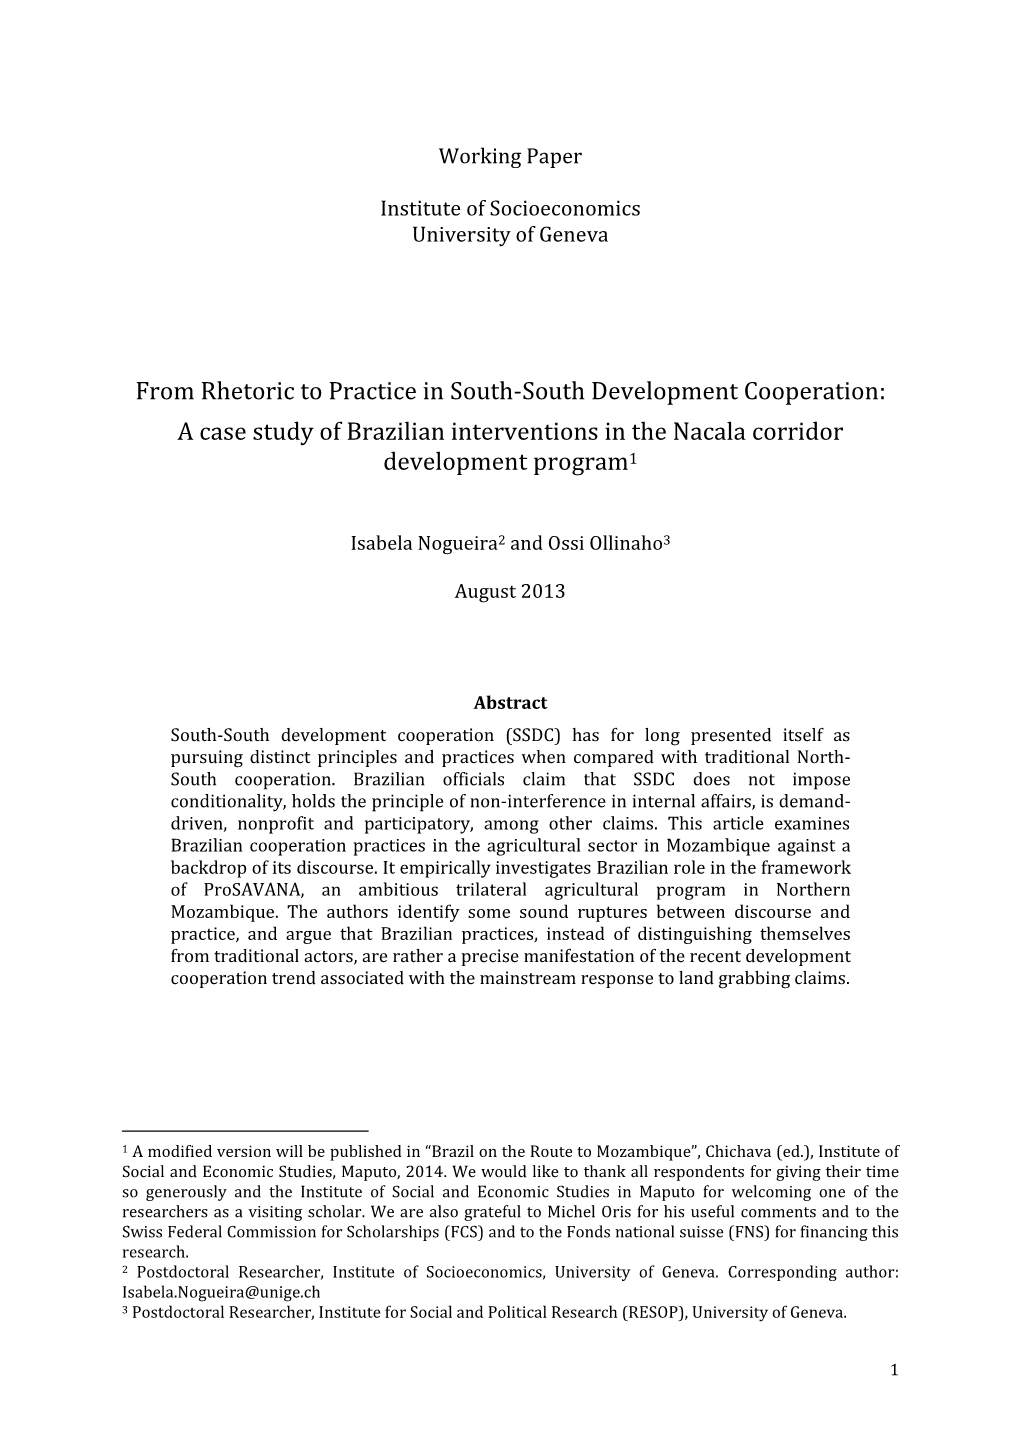 A Case Study of Brazilian Interventions in the Nacala Corridor Development Program1